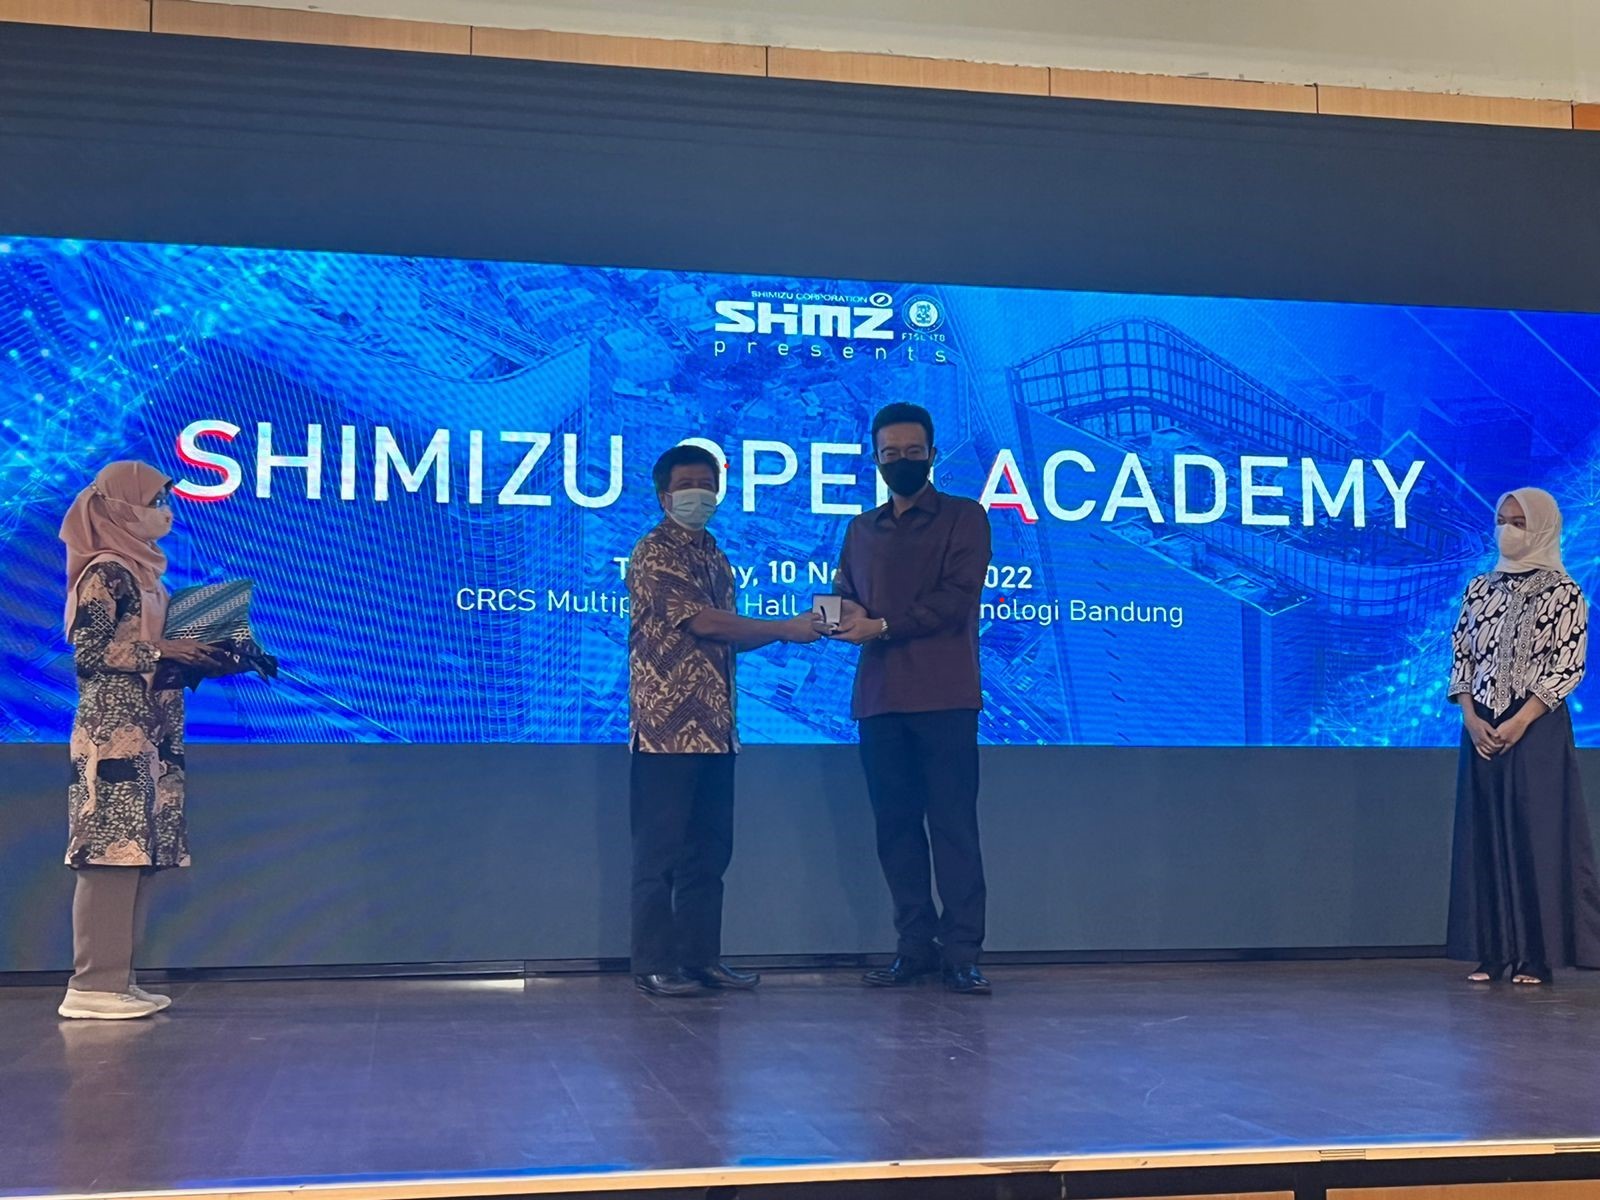 Shimizu Open Academy